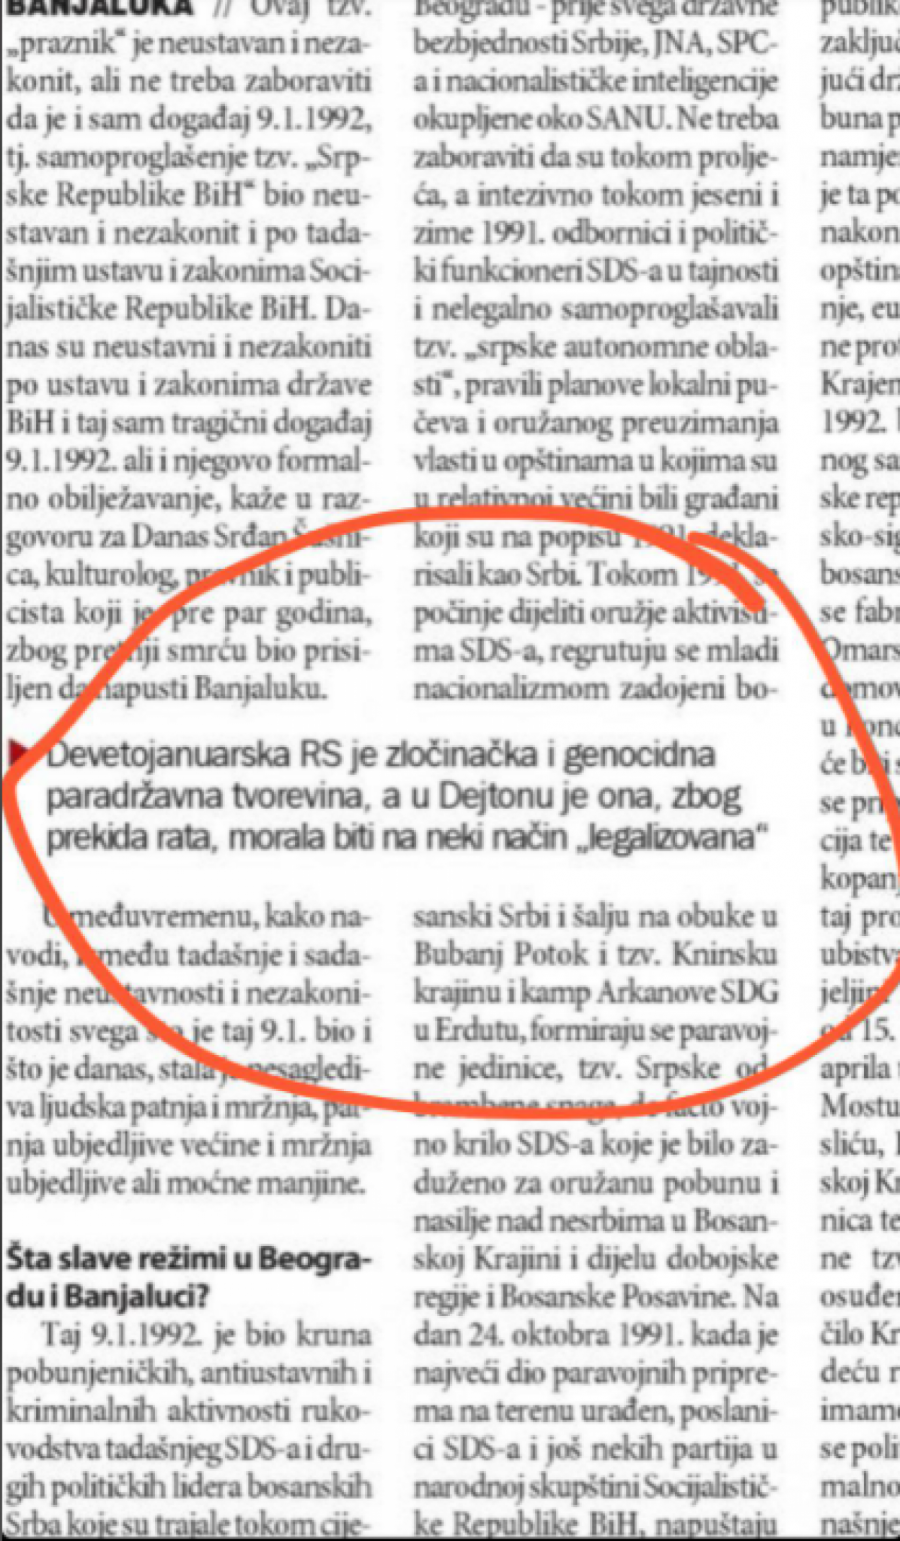 SRAMNO PISANJE ĐILASOVSKIH NOVINA: Gaženje srpskog naroda: Republika Srpska je genocidna, paradržavna tvorevina!